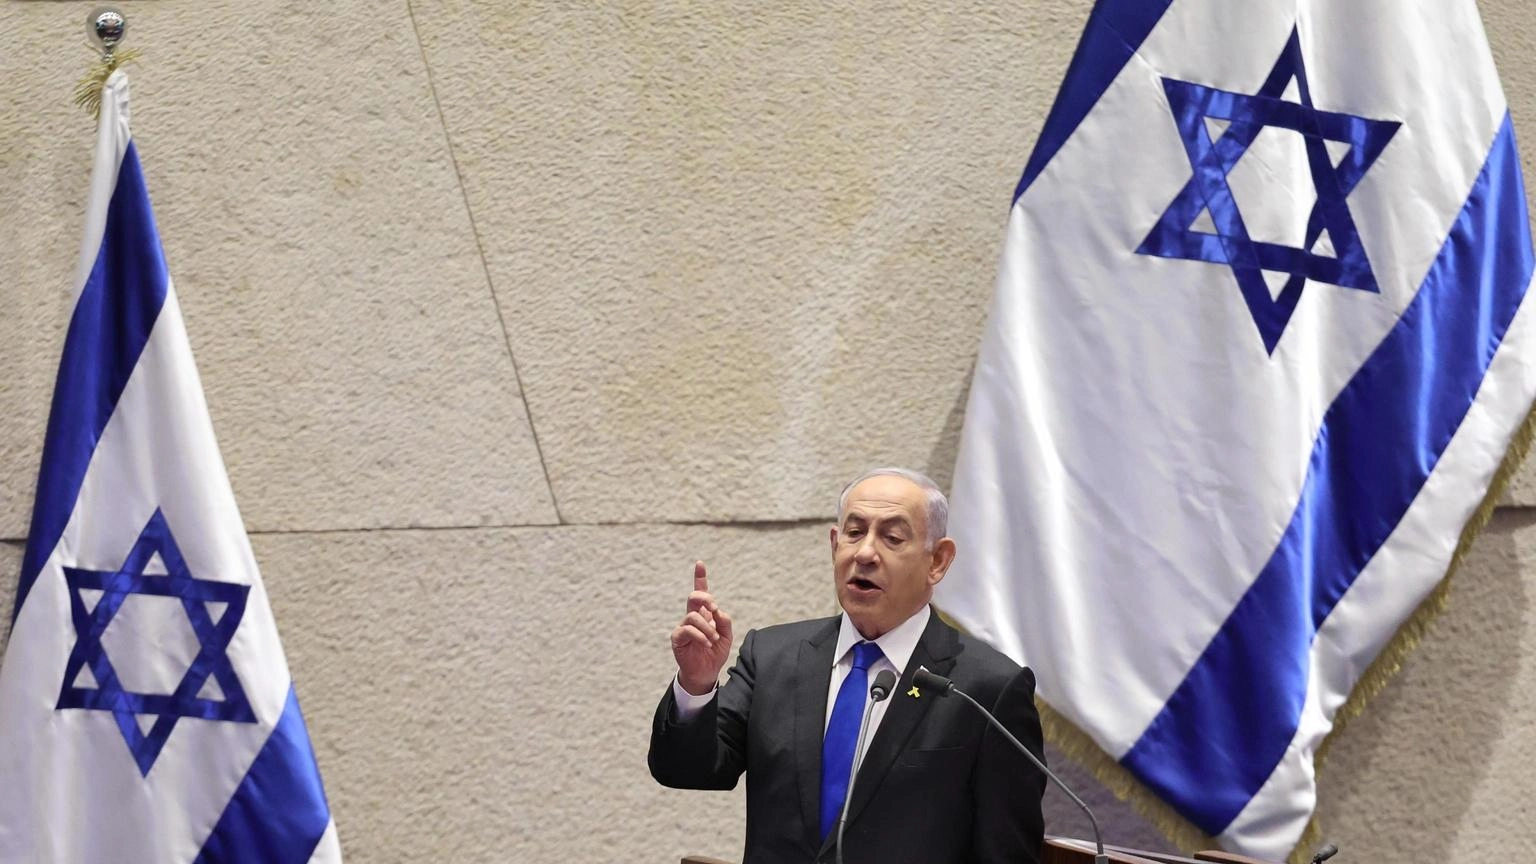 Netanyahu, incontro con Biden giovedì alla Casa Bianca